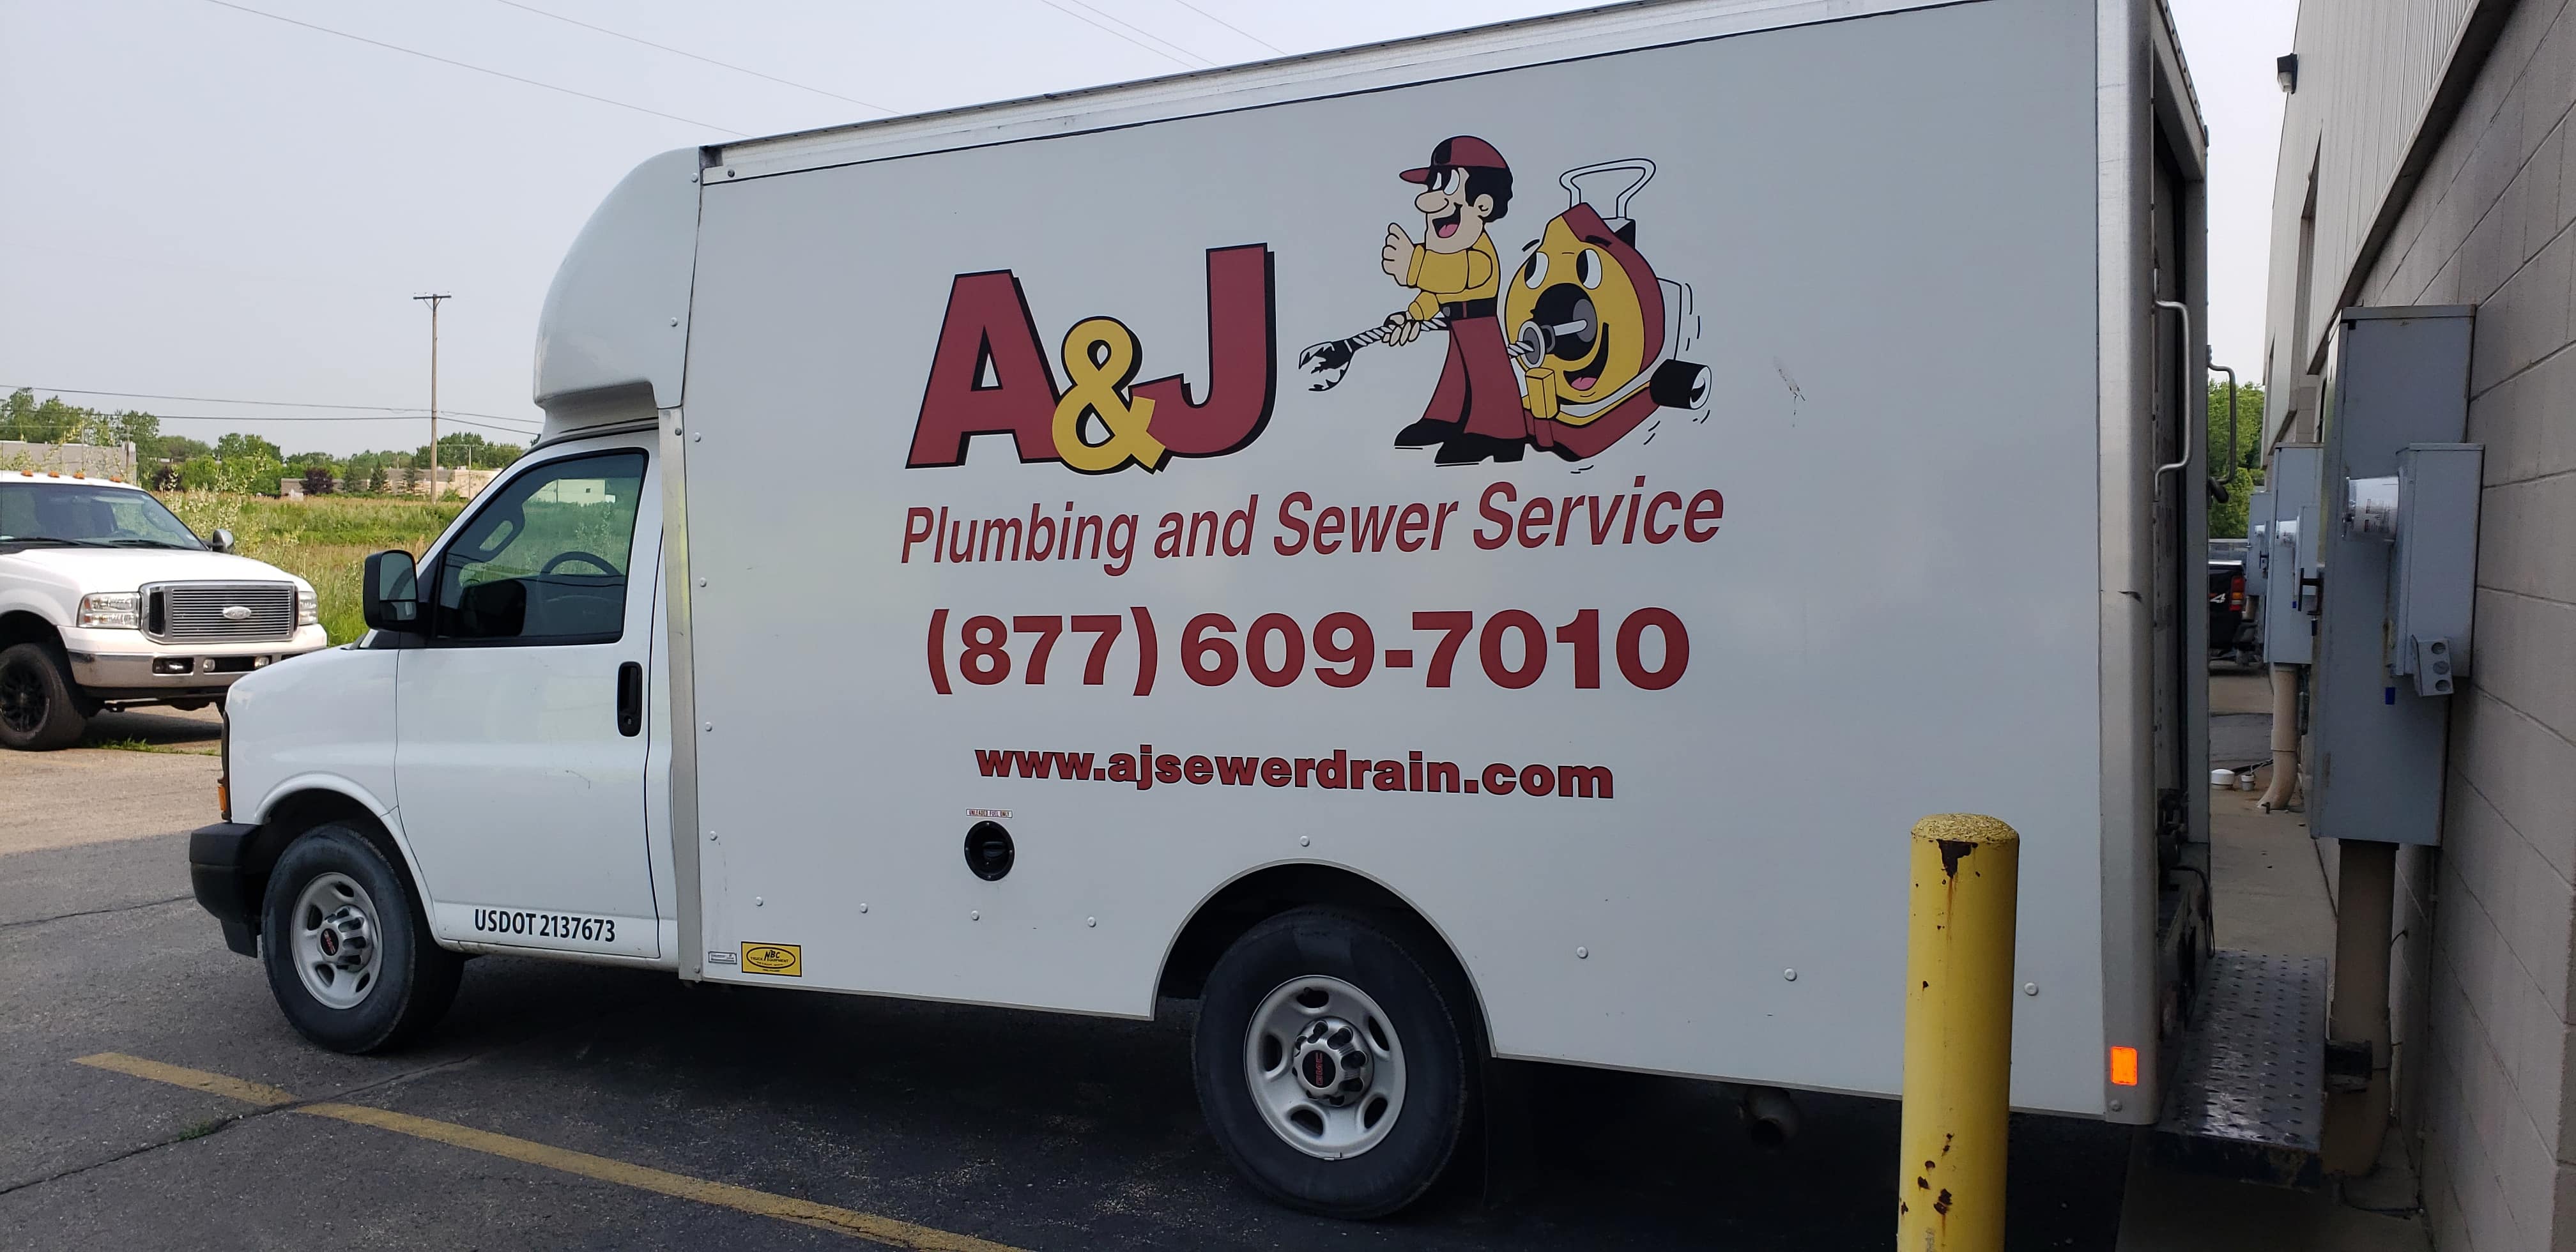 A&J Plumbing & Sewer Service - New Baltimore, MI, US, plumbing companies near me